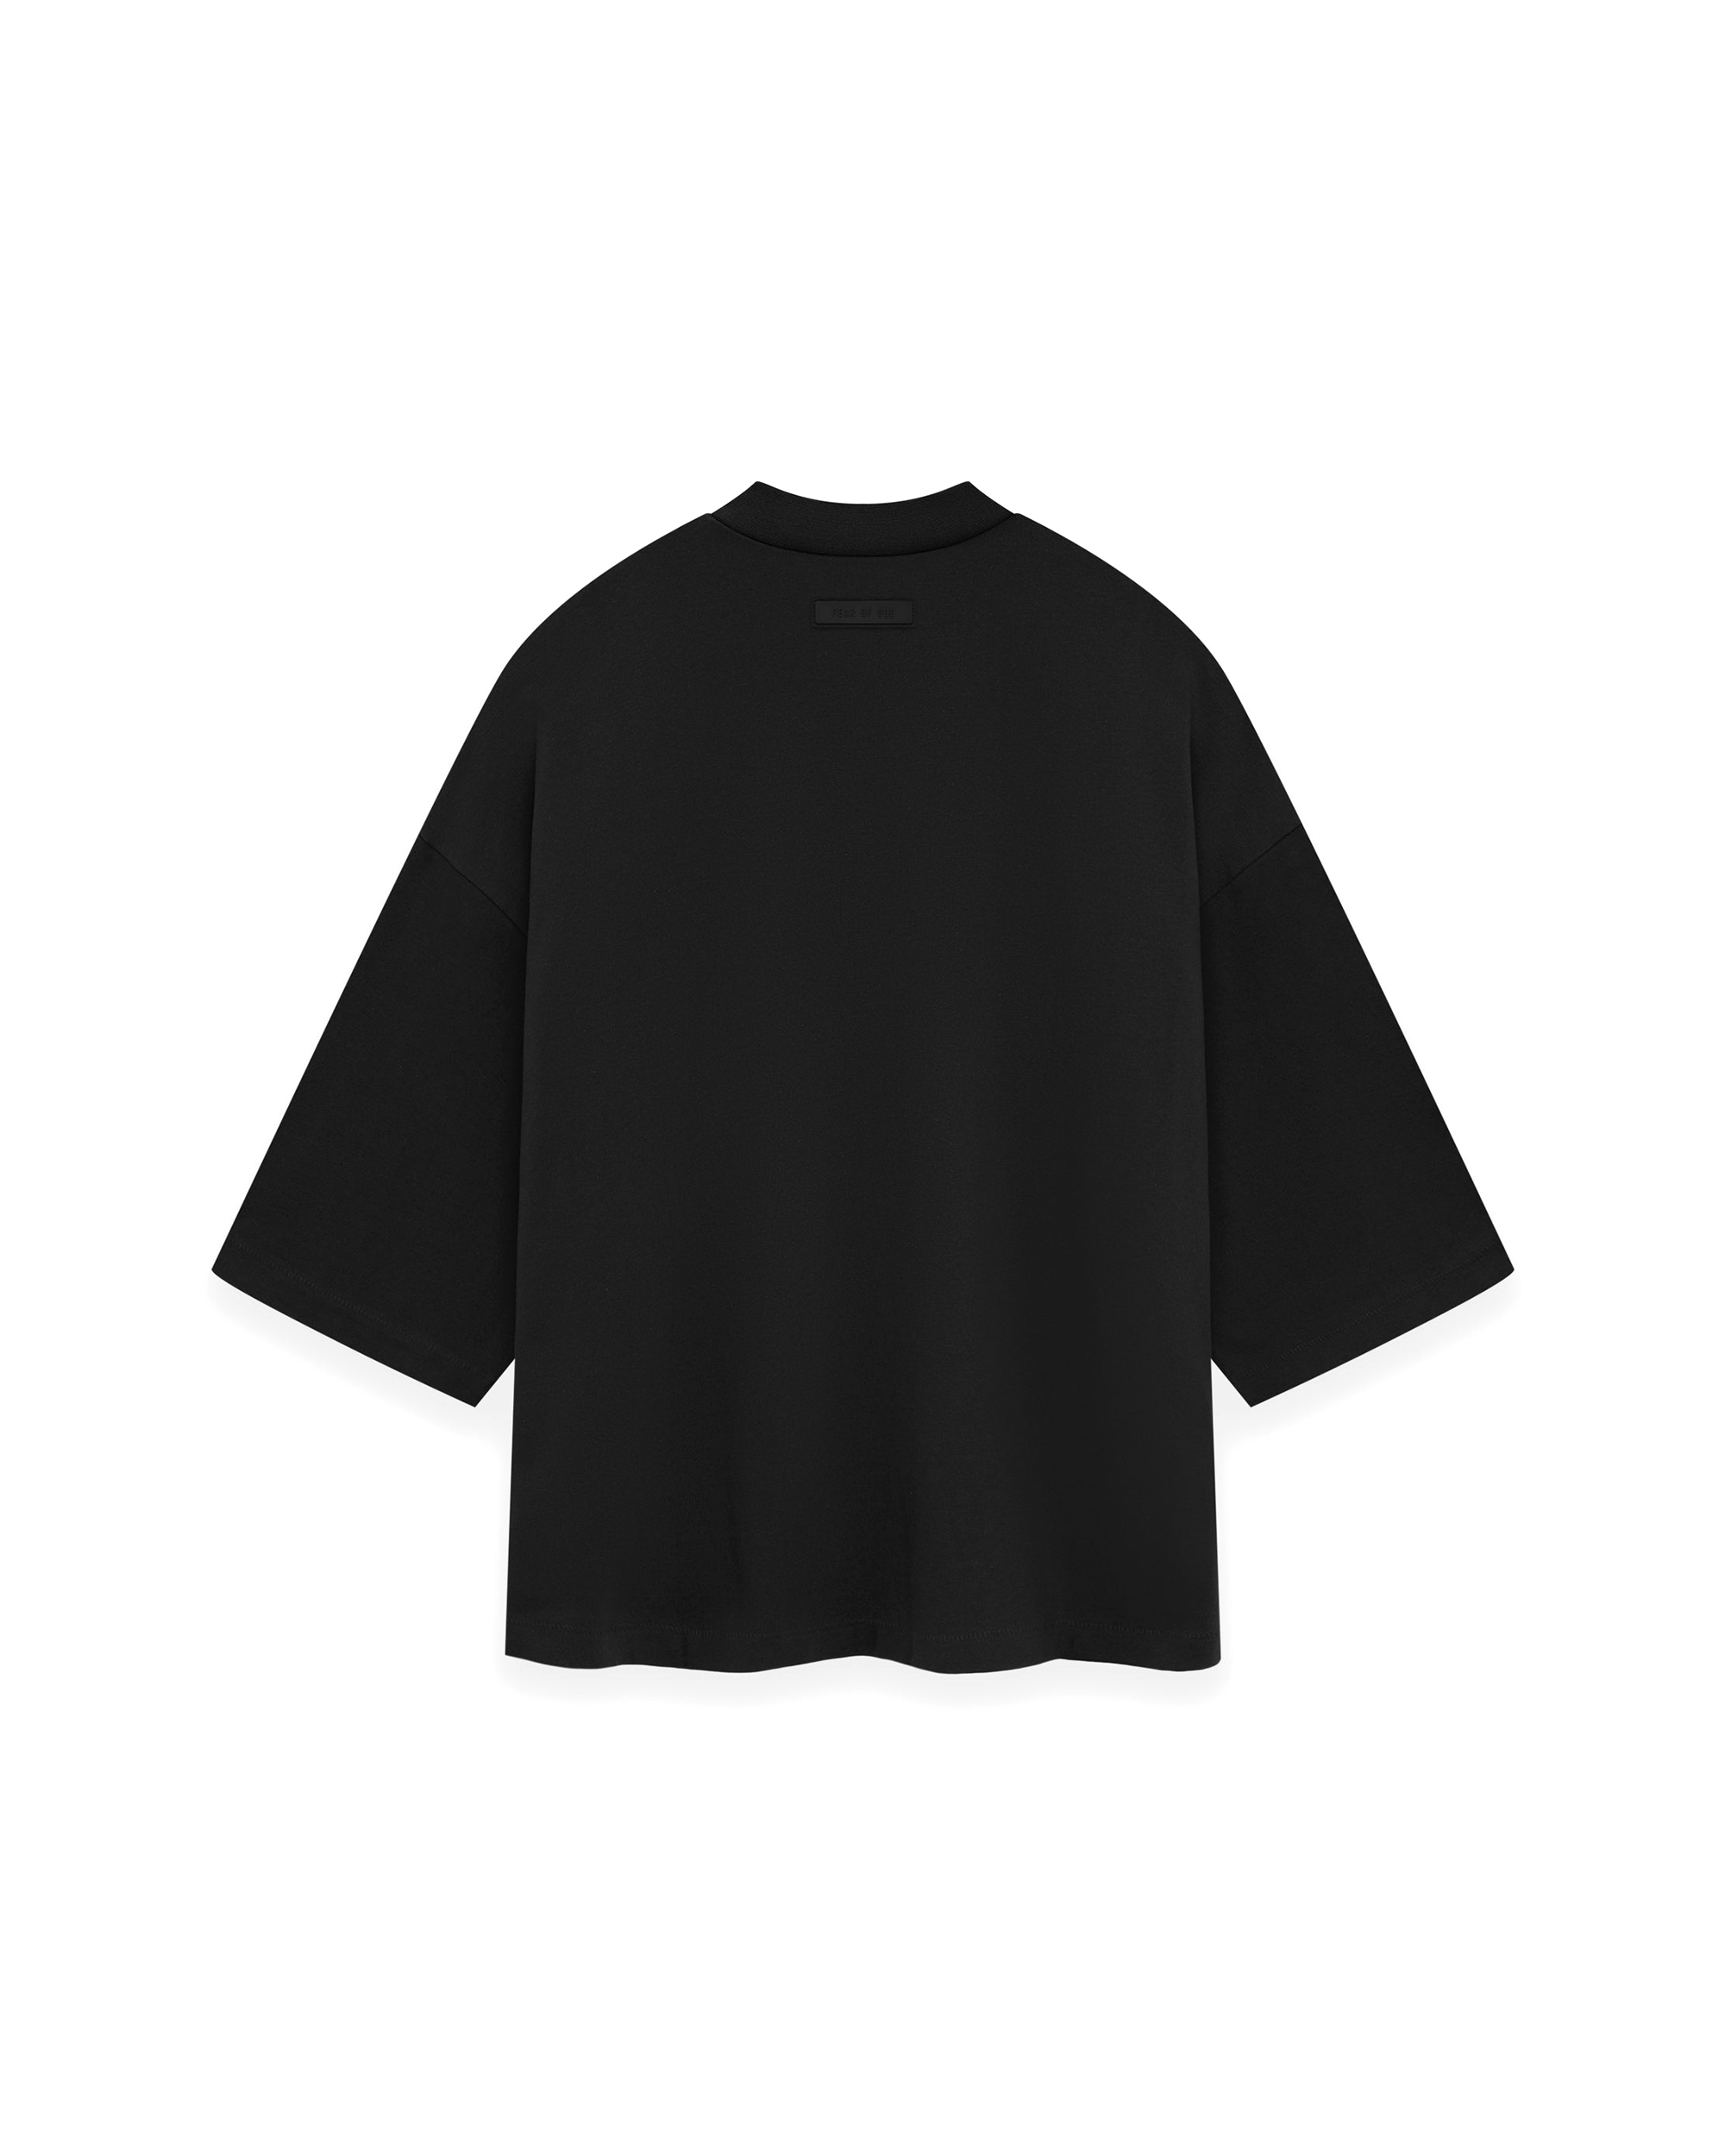 Football T-shirt - Jet Black